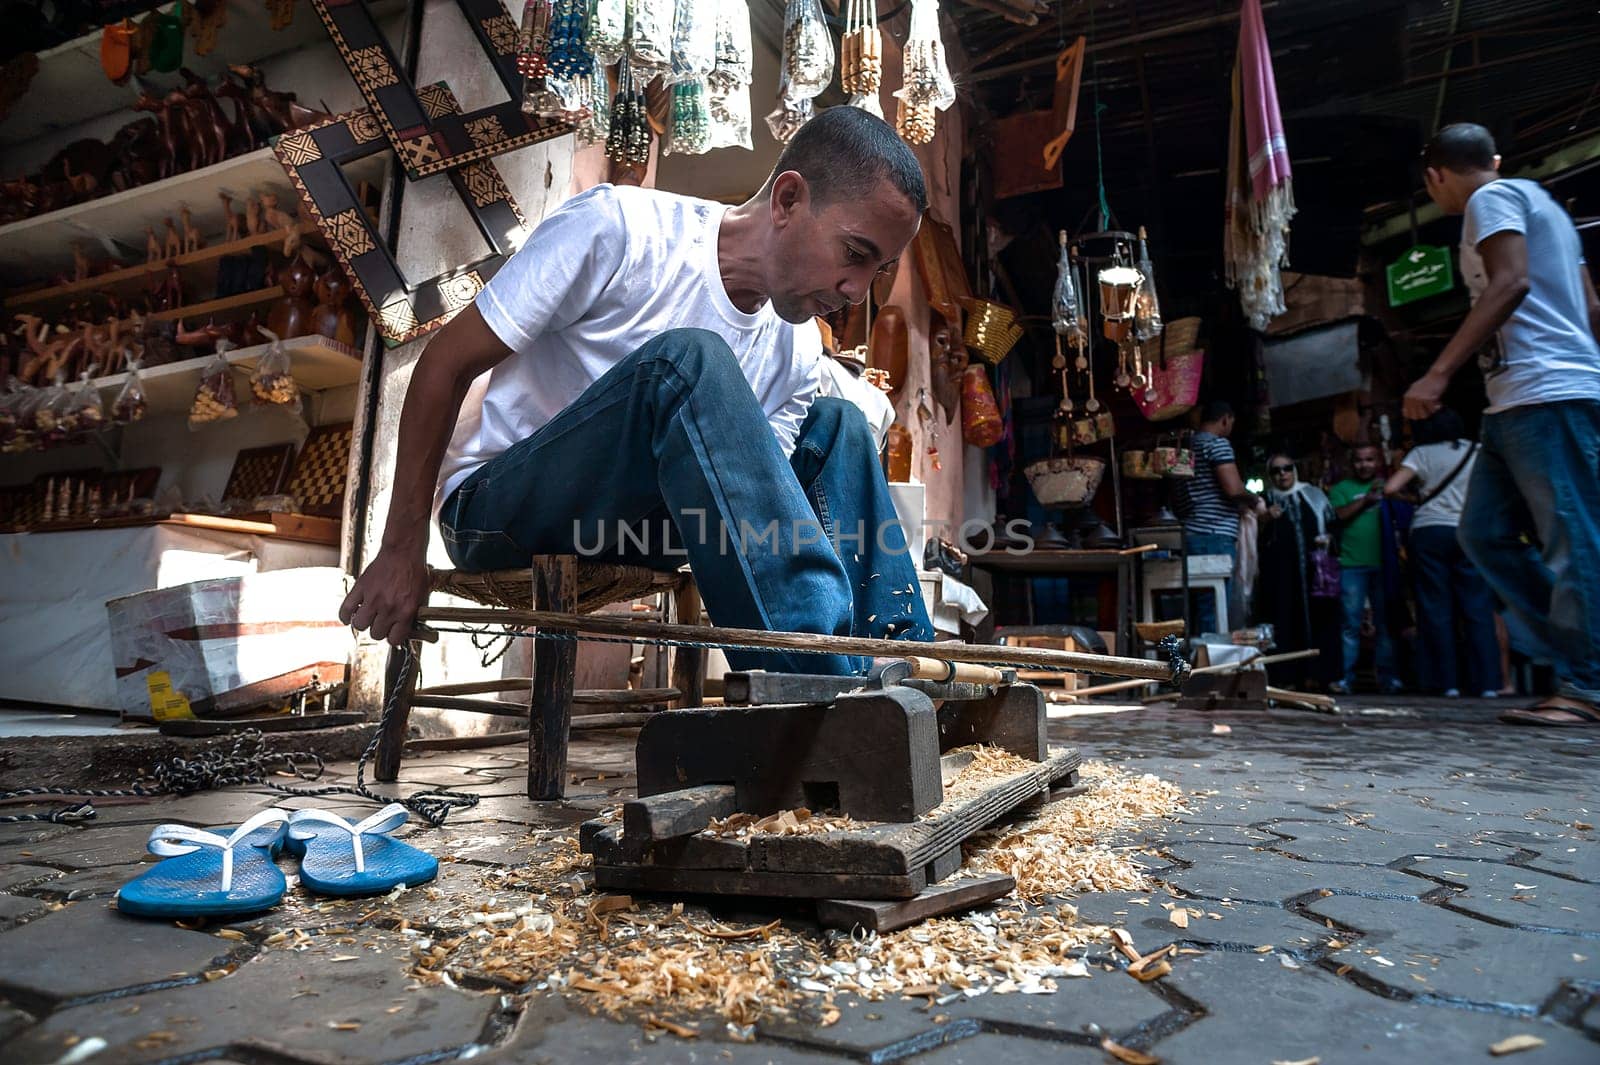 Carpenter in marrakech by Giamplume